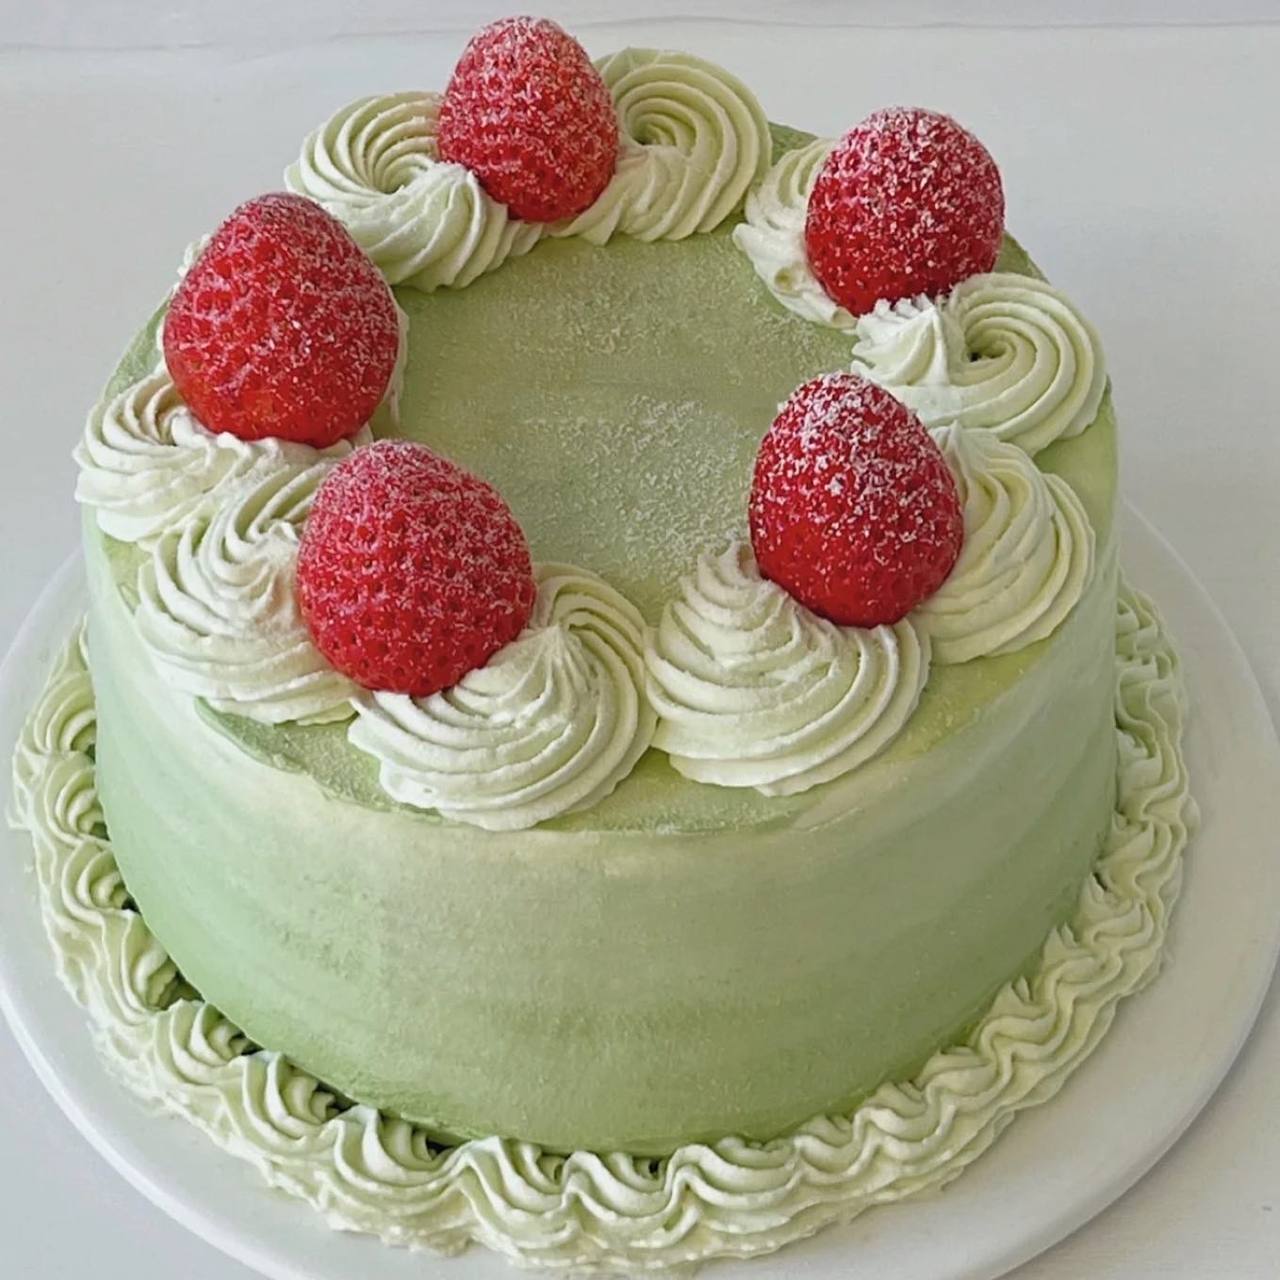 Matcha layer cake with white chocolate cream recipe | Gourmet Traveller